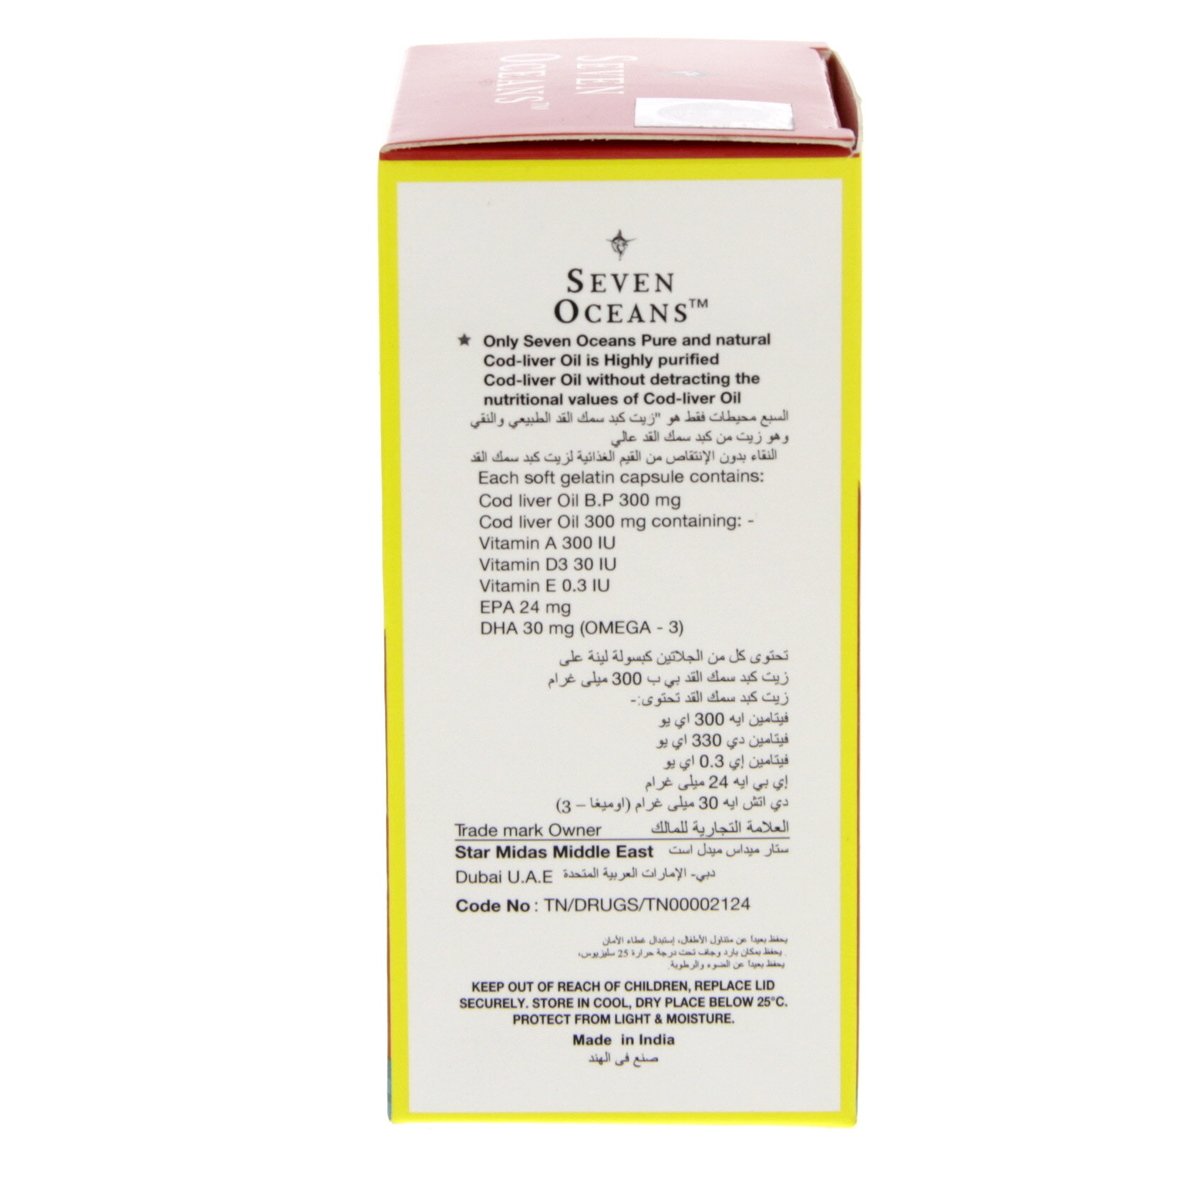 Seven Oceans Original Pure Vitamin Rich COD-Liver Oil Capsules With Omega-3 100 pcs